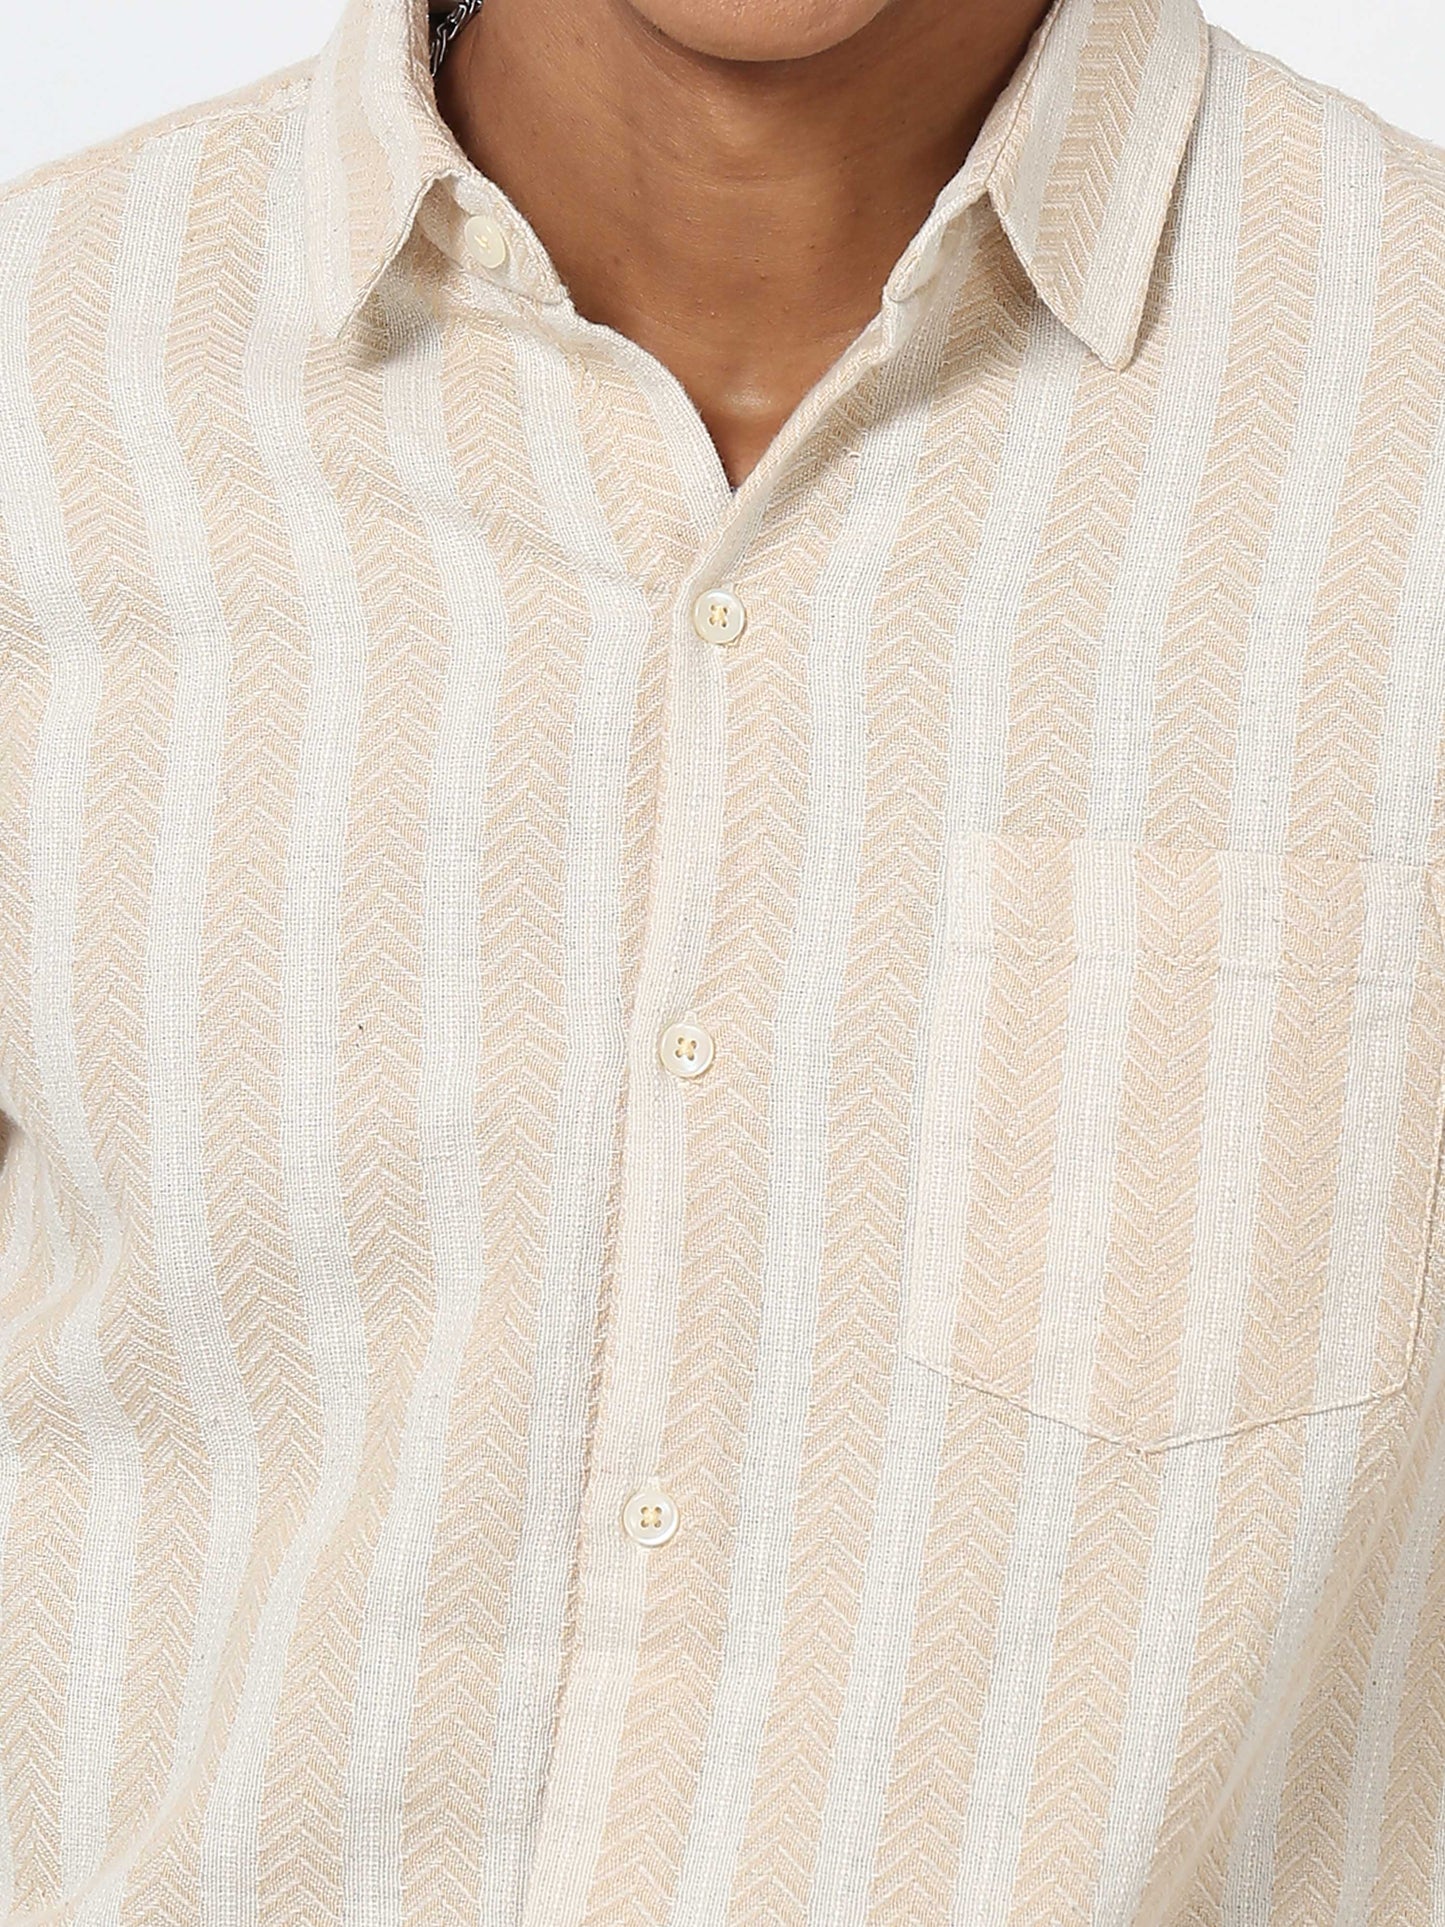 Soapstone Arrow Striped Long Sleeve Shirt